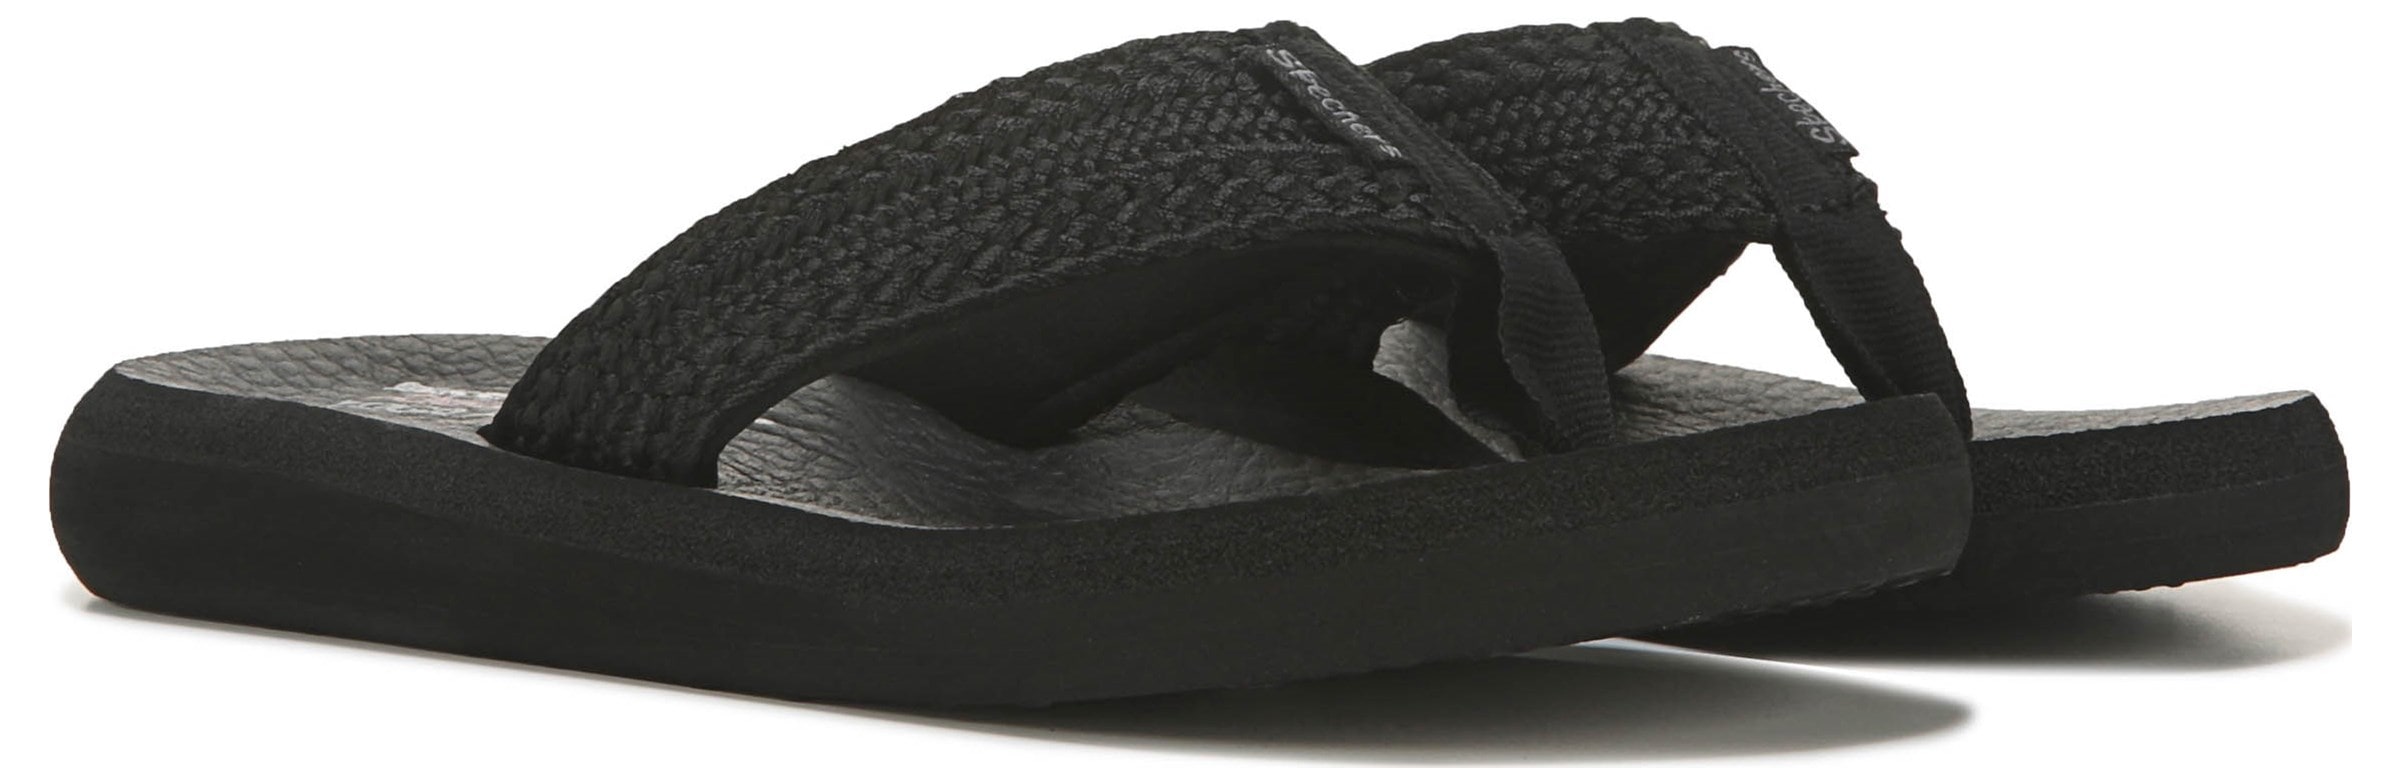 Skechers 31619 Wedge Yoga Foam Thong Flip Flop Sandals Choose Sz